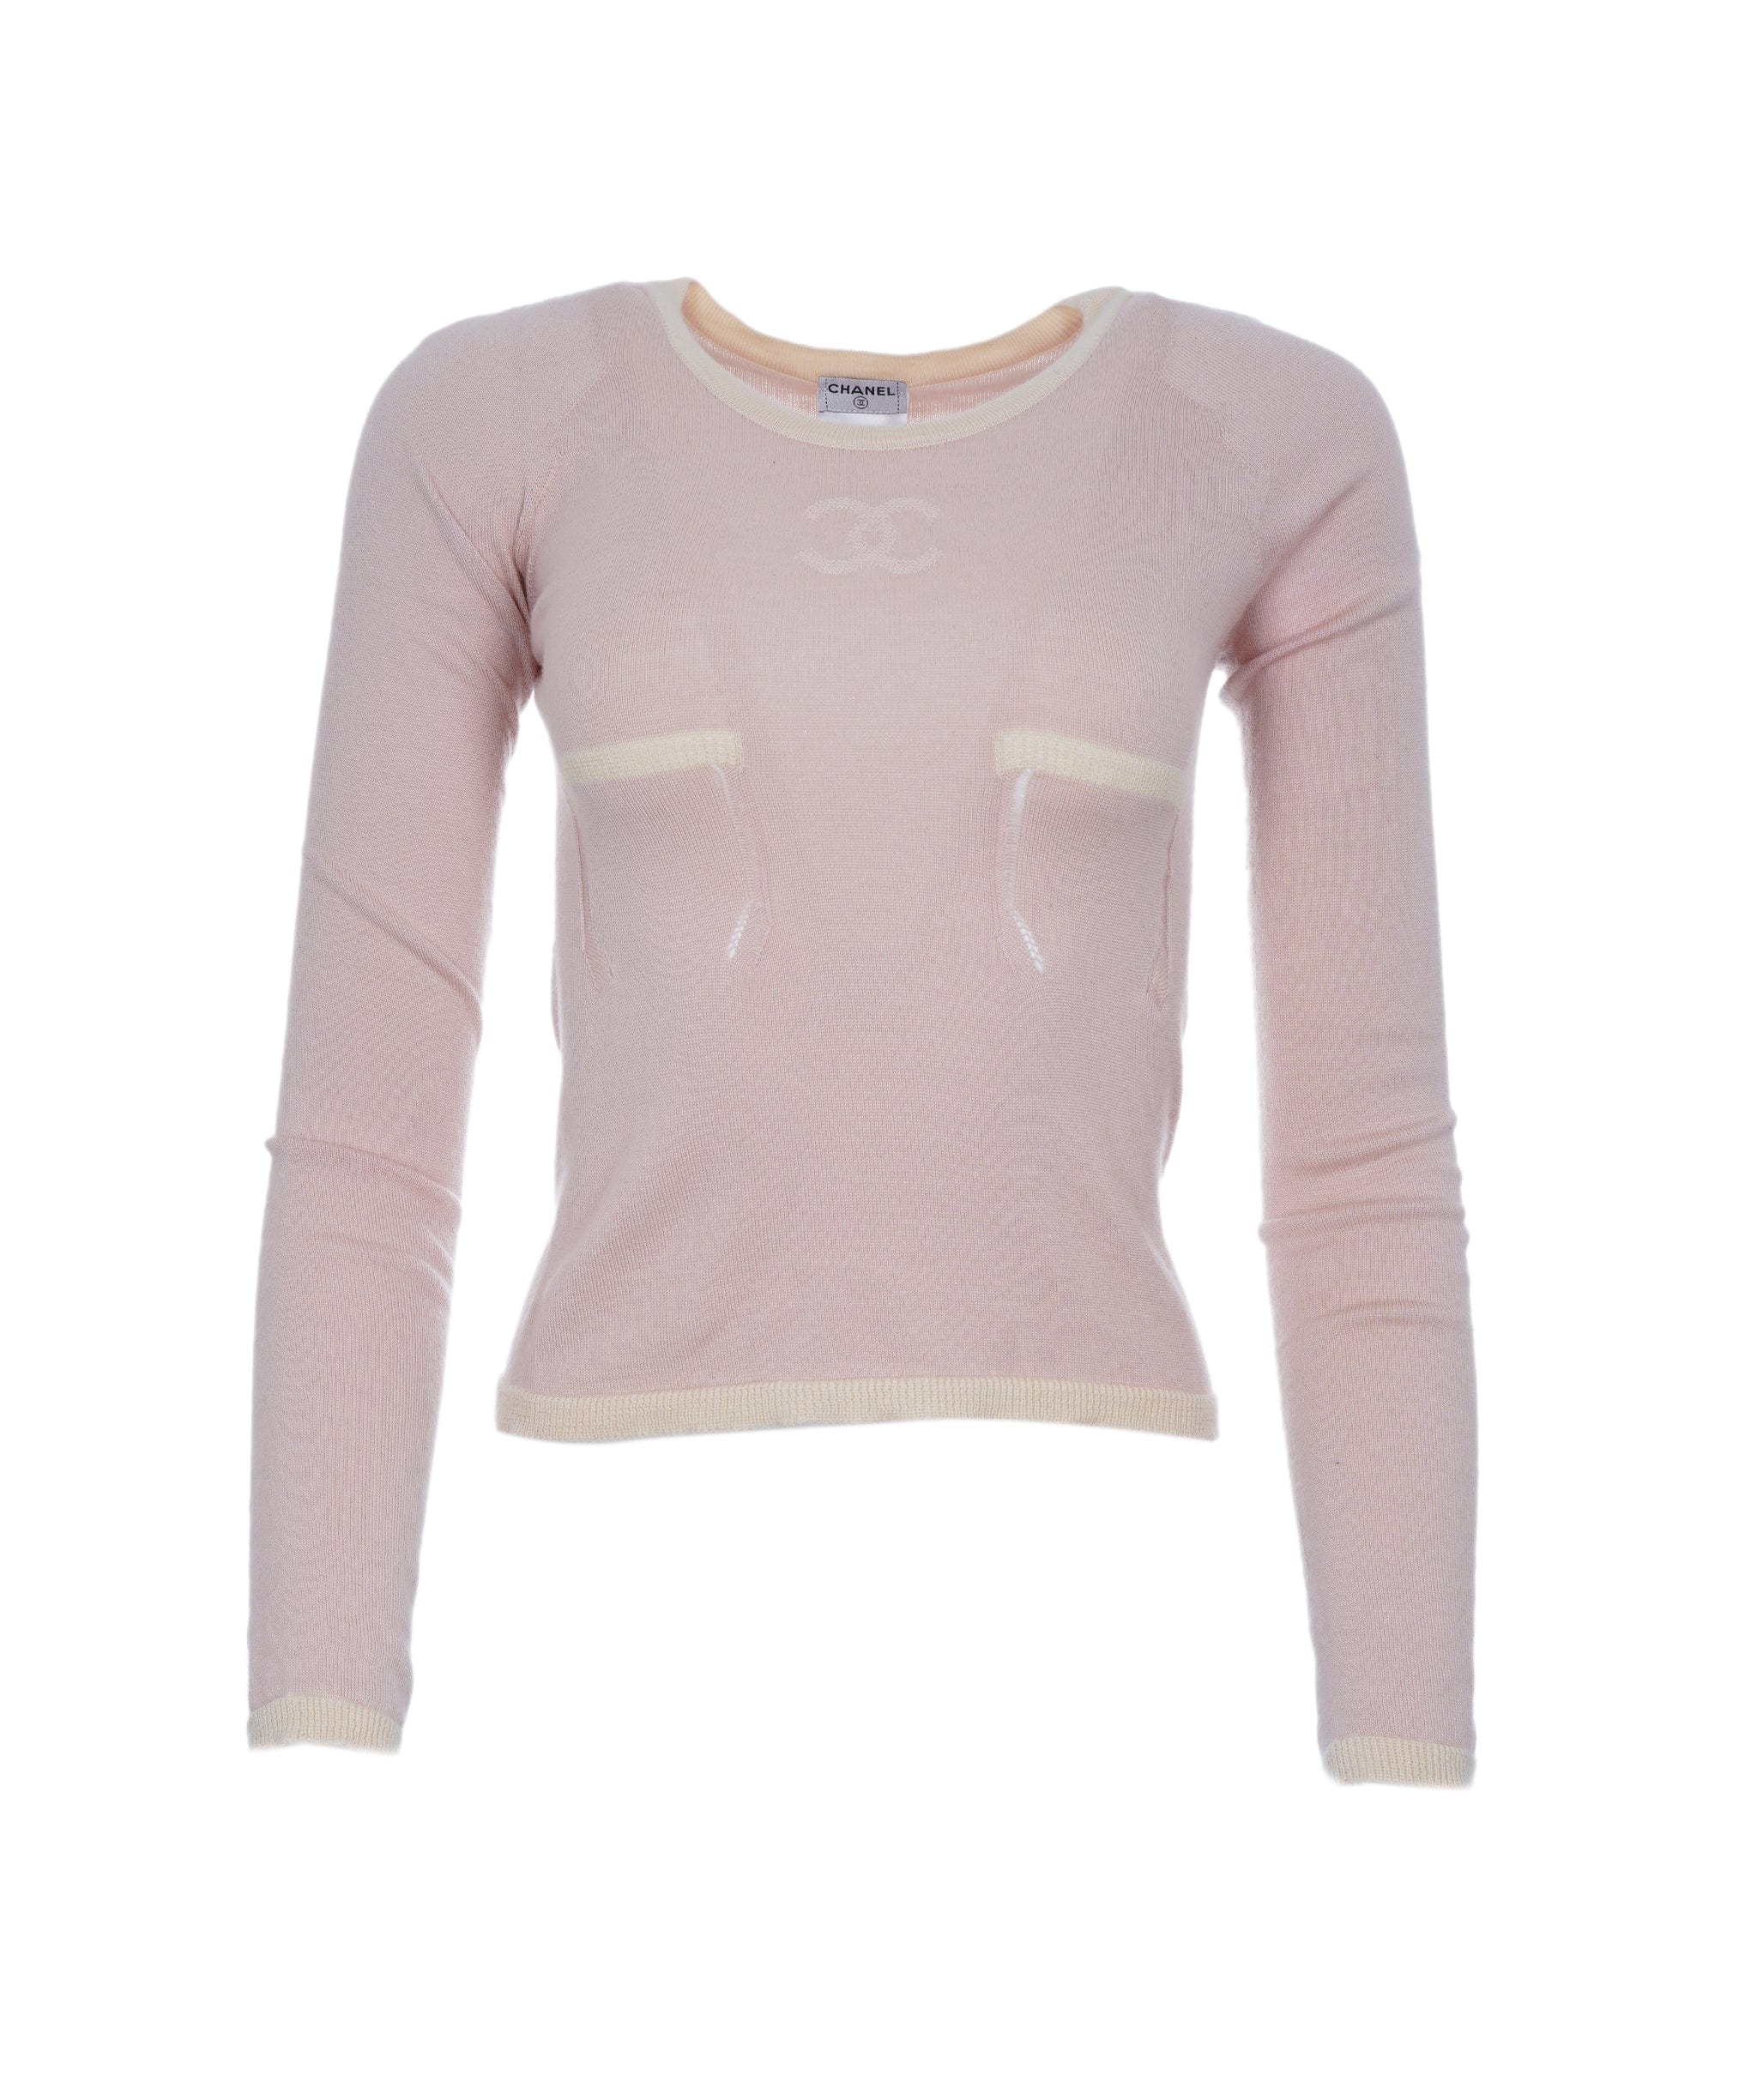 Chanel Chanel 04C CC Sweater Pink Cream ASL6955